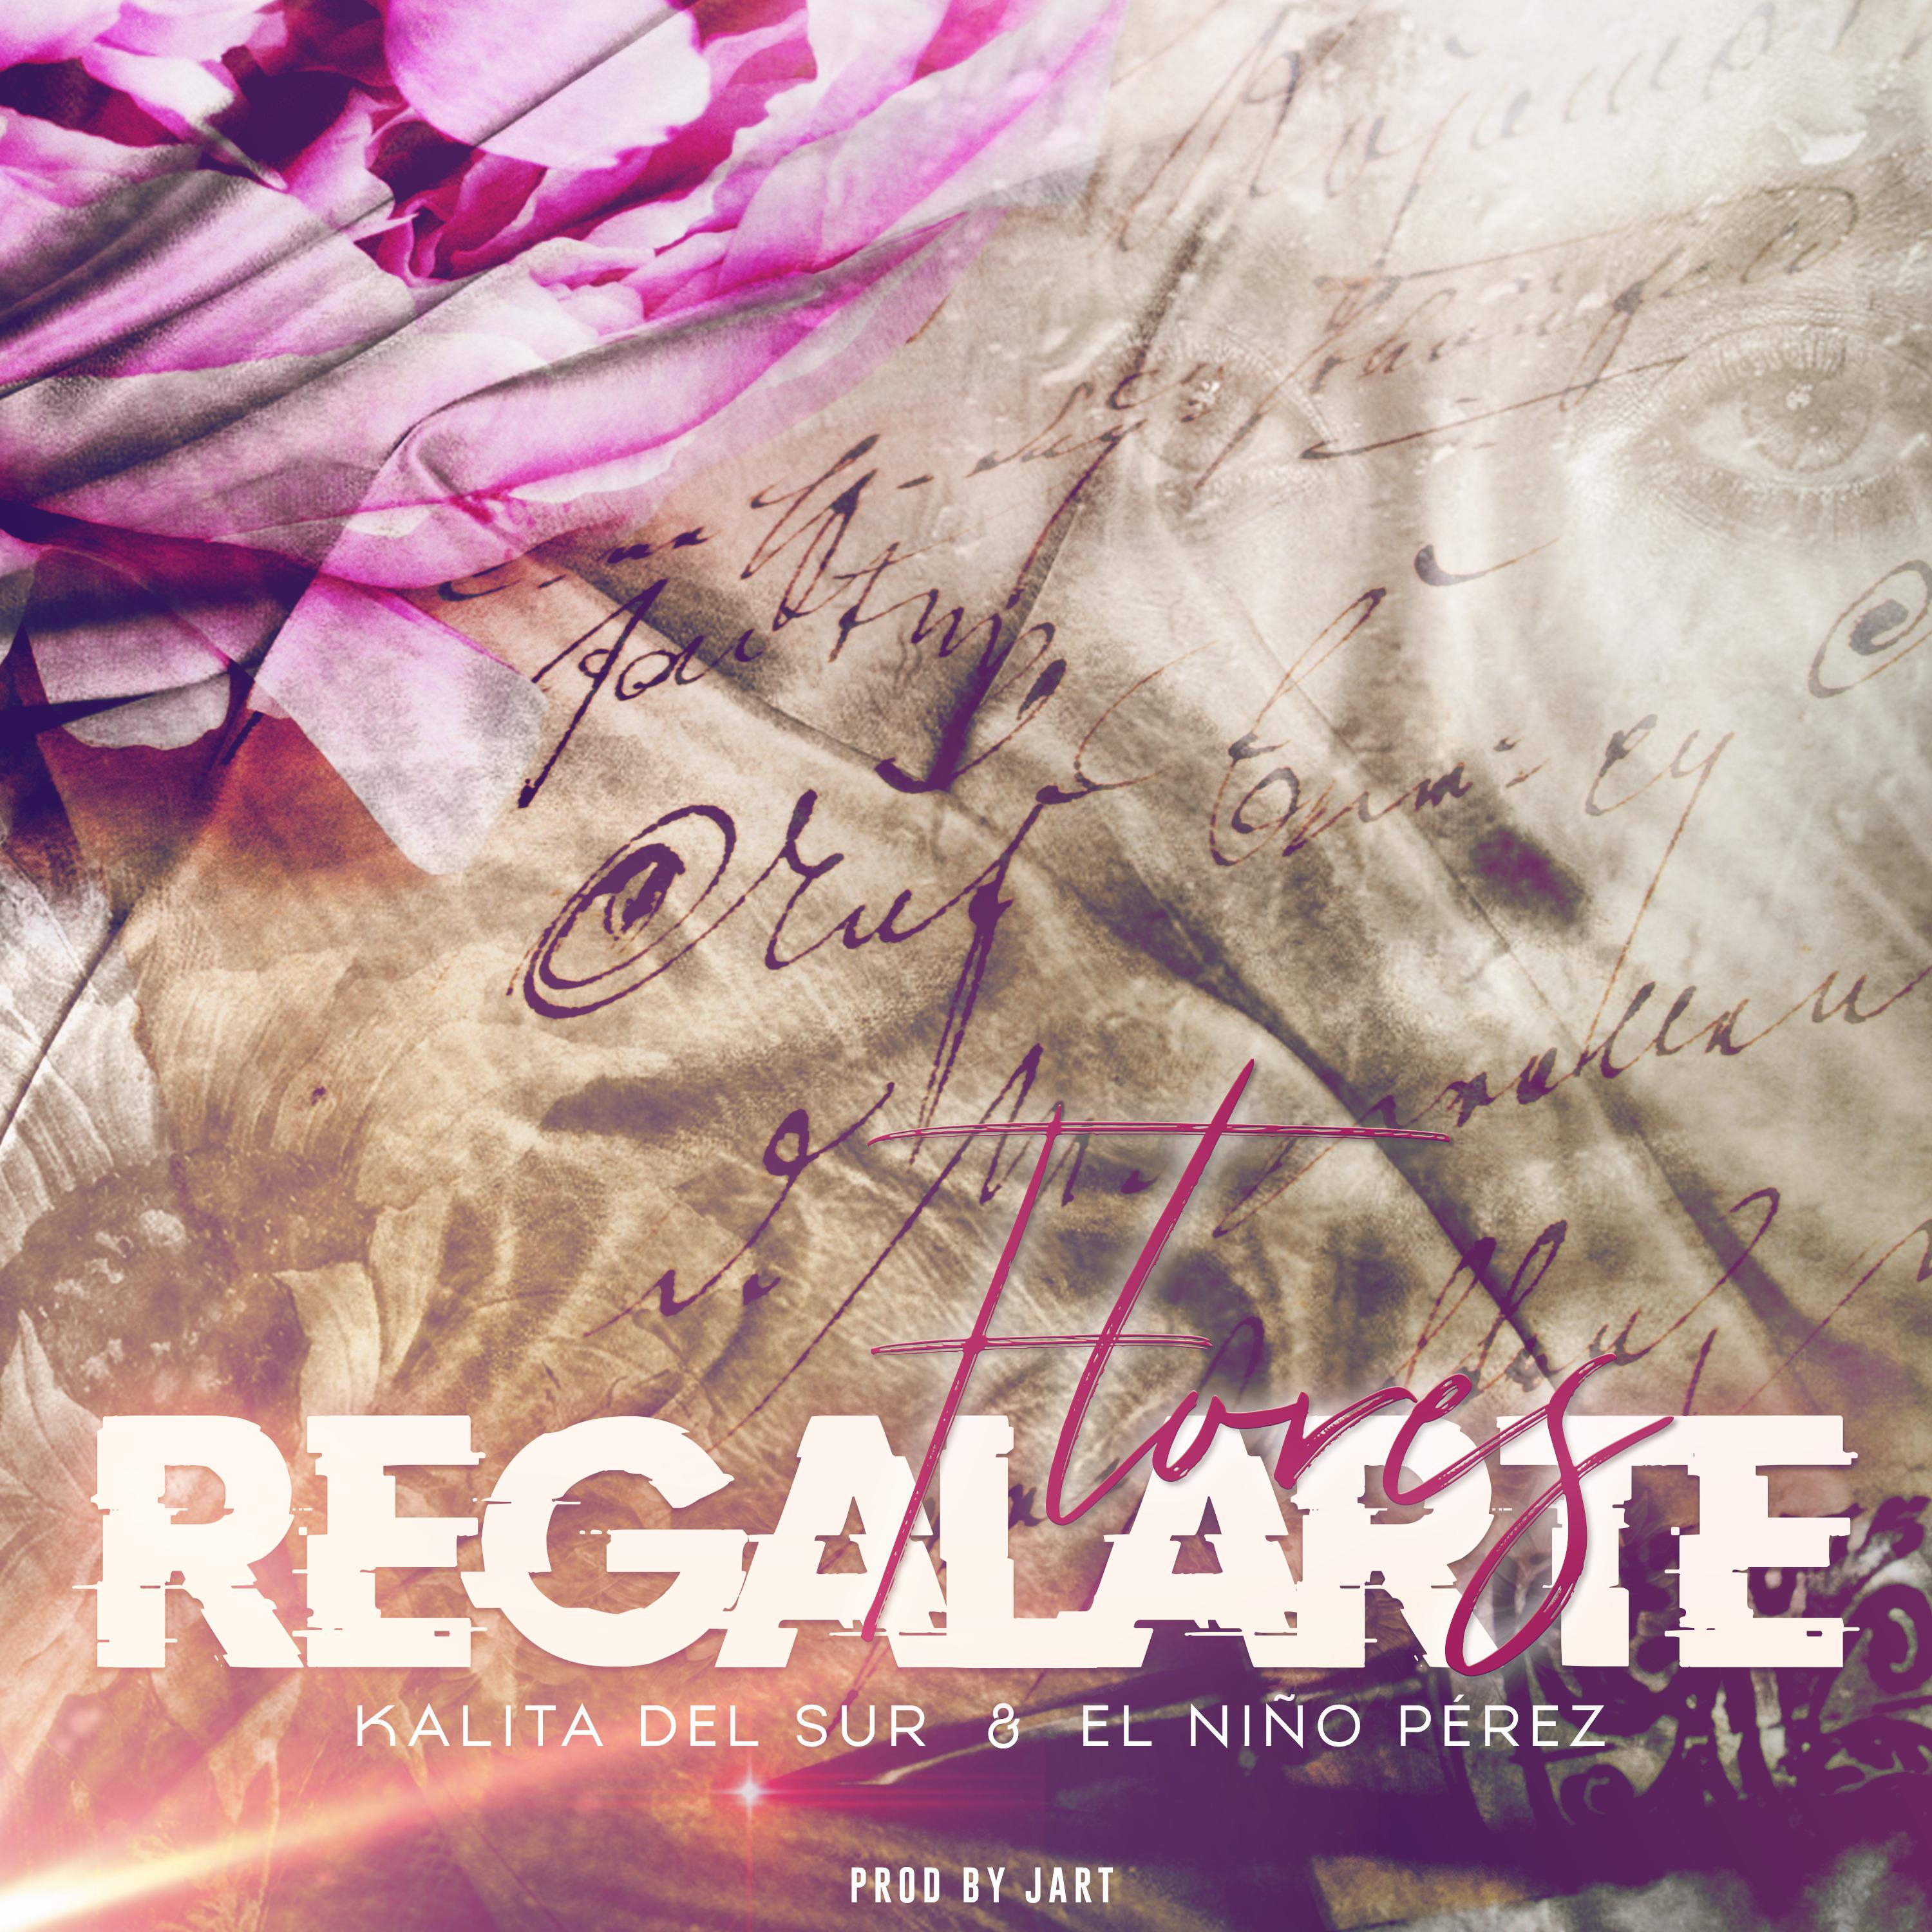 Постер альбома Regalarte Flores